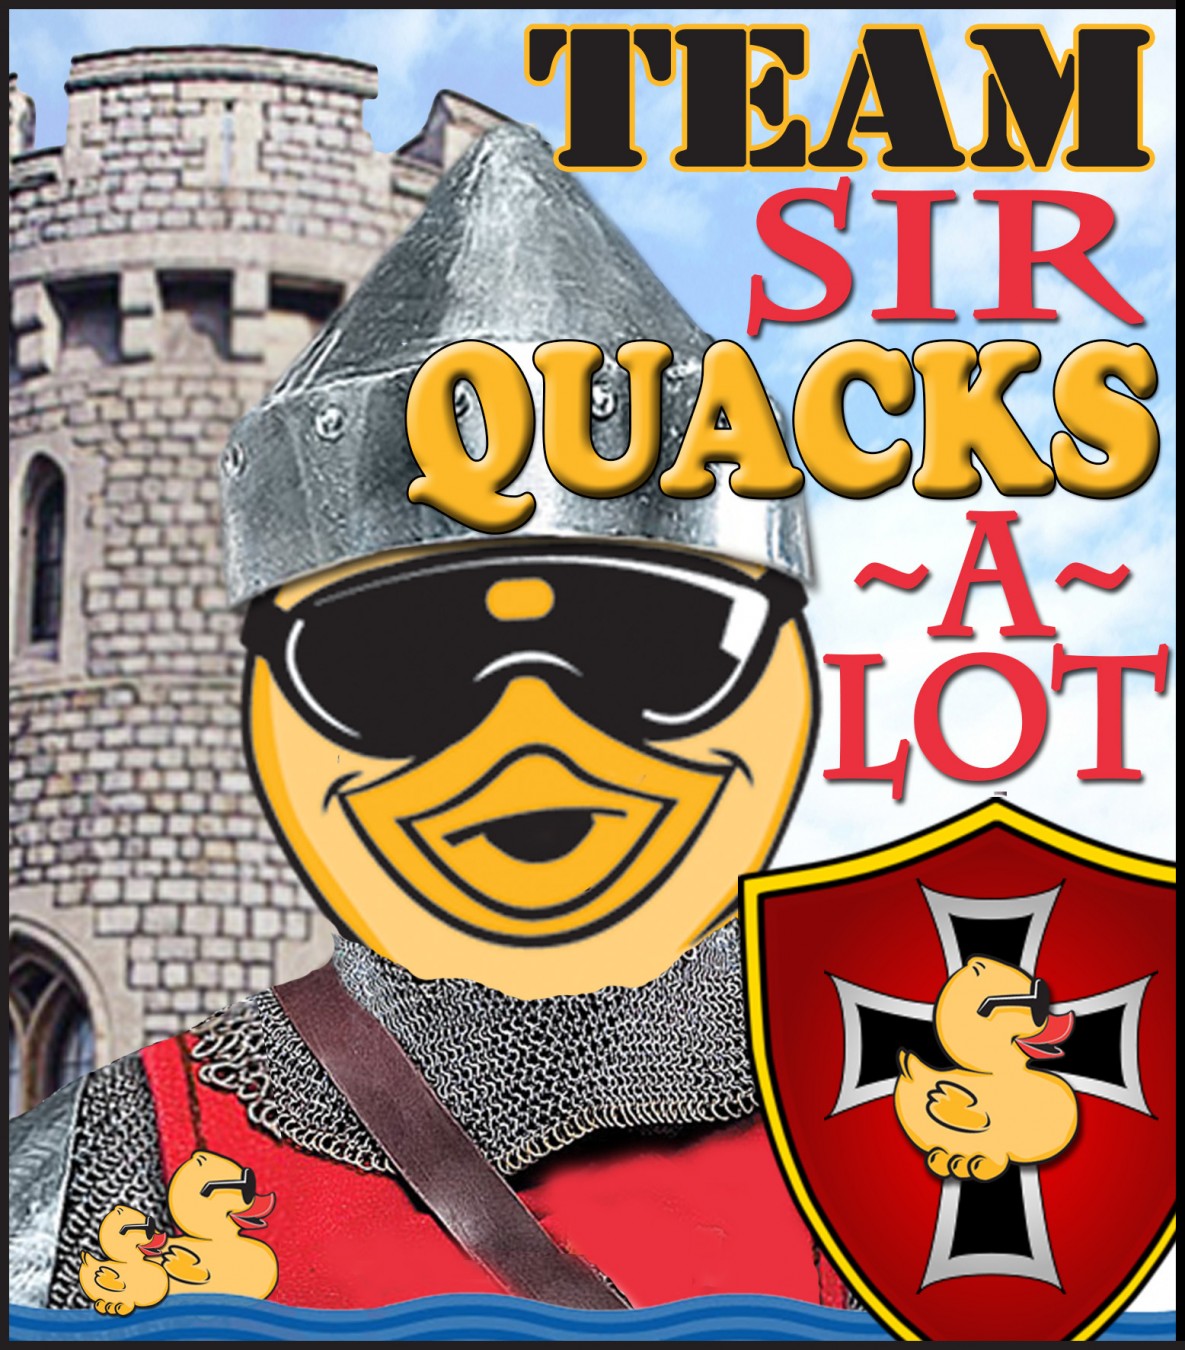 Sir Quacks-A-Lot!